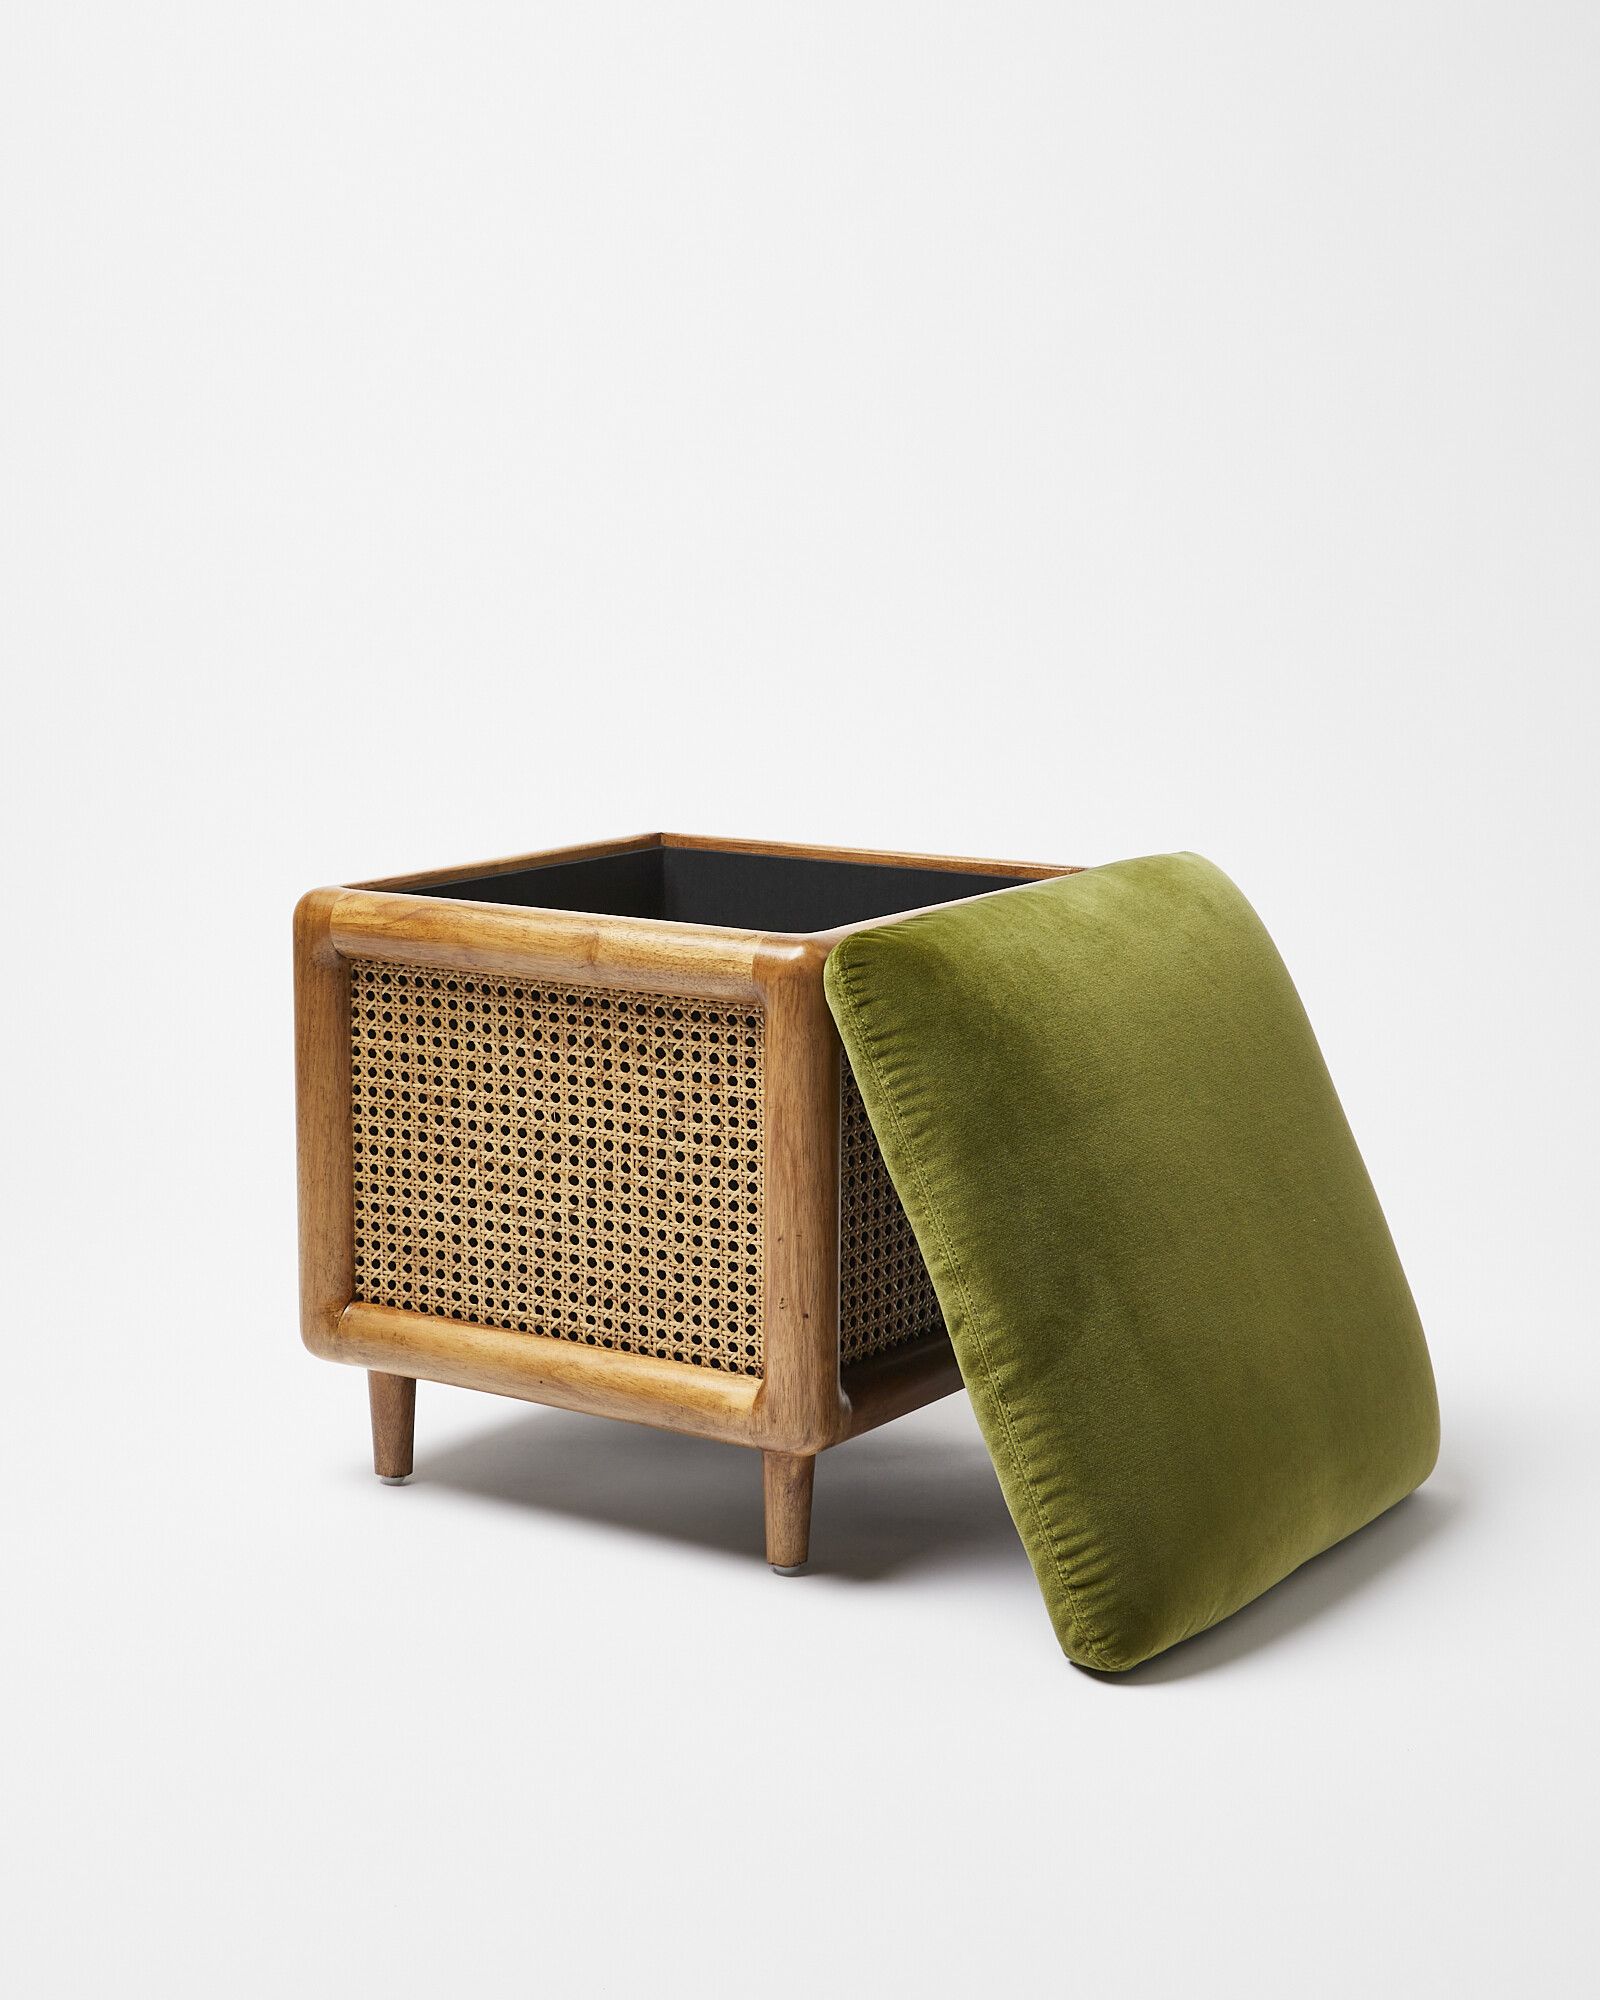 The Timeless Elegance of Rattan Furniture